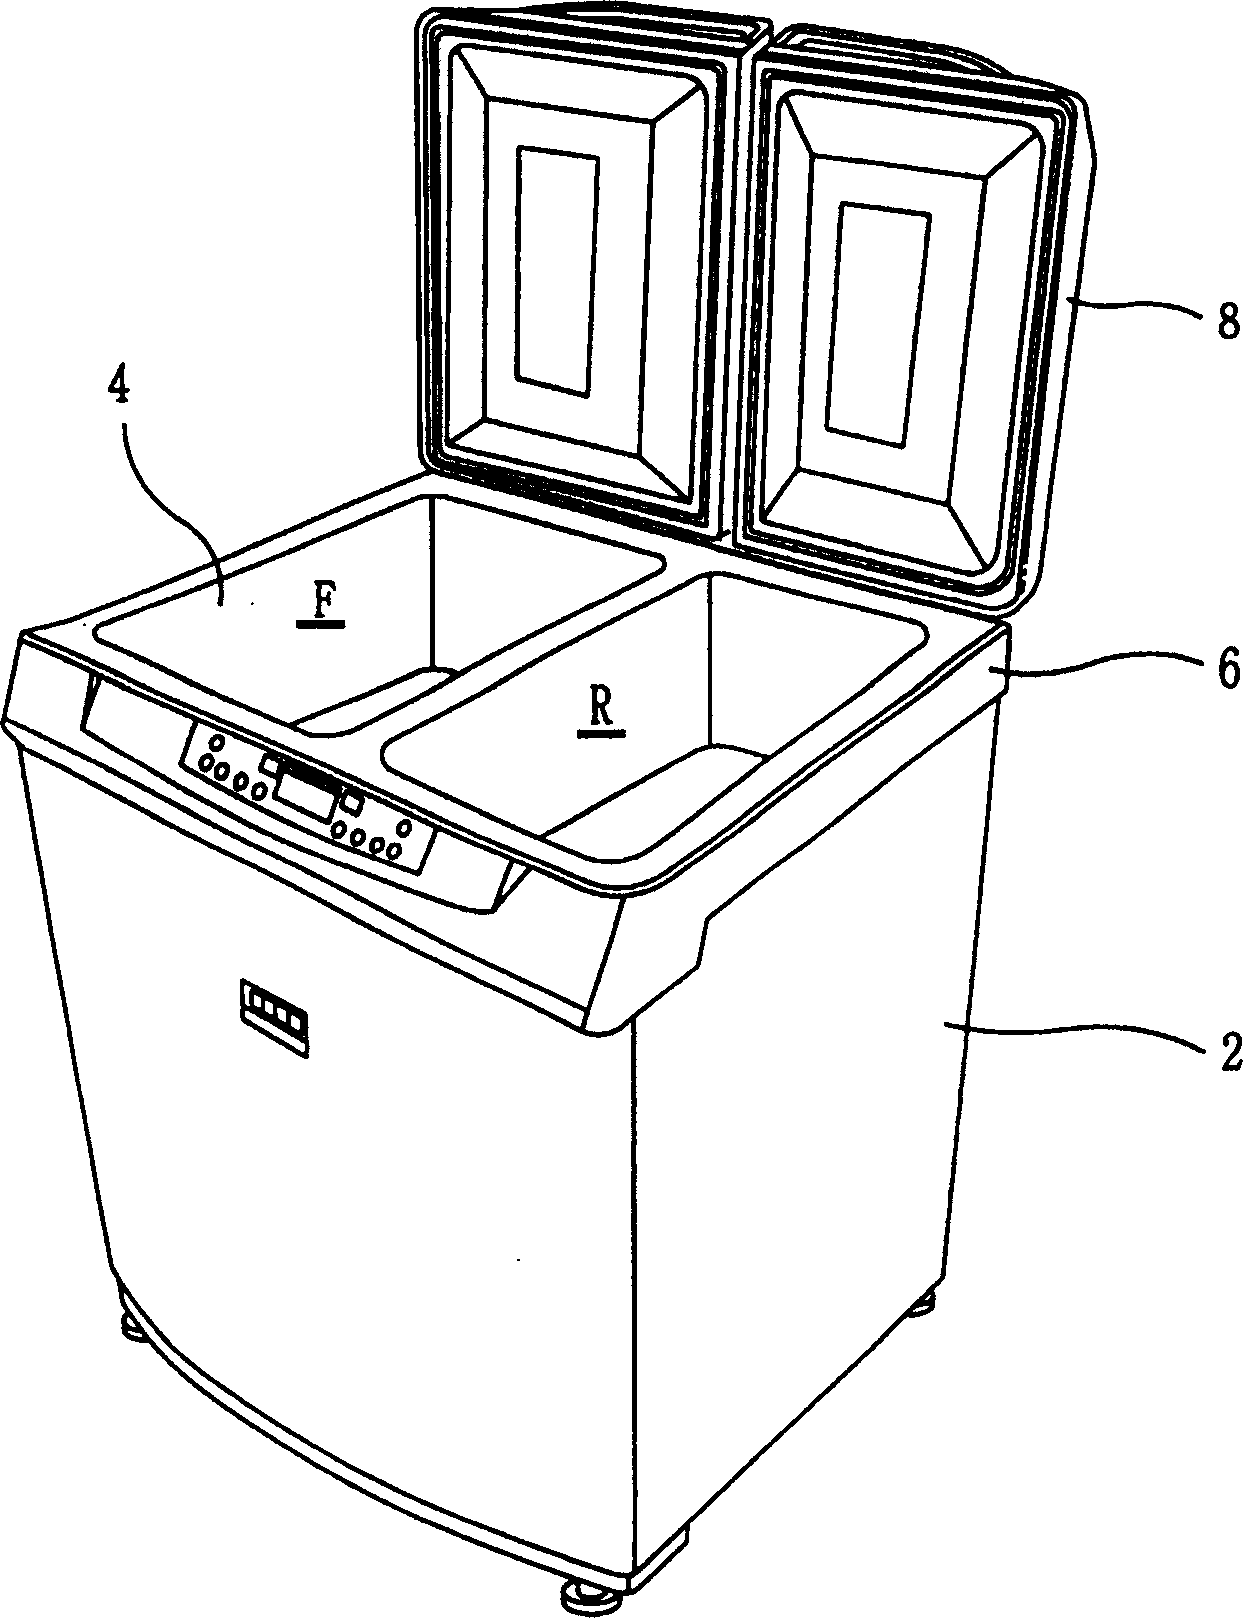 Hinge structure of refrigerator door for storing pickles